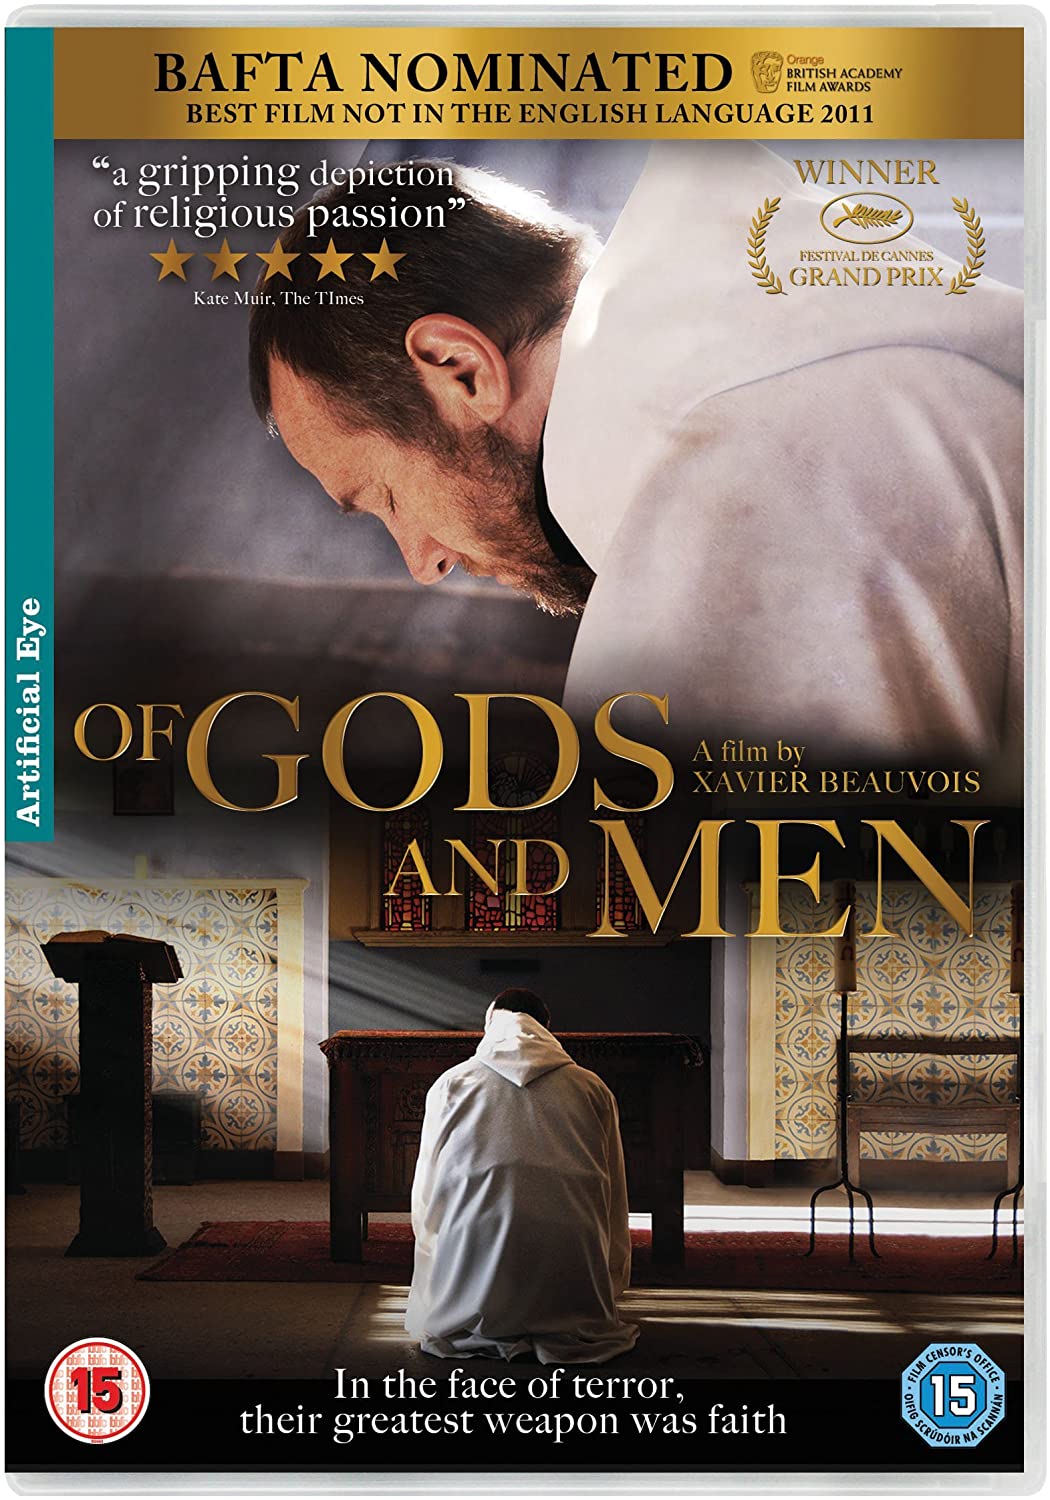 Of Gods And Men [2010] – Drama/Geschichte [DVD]